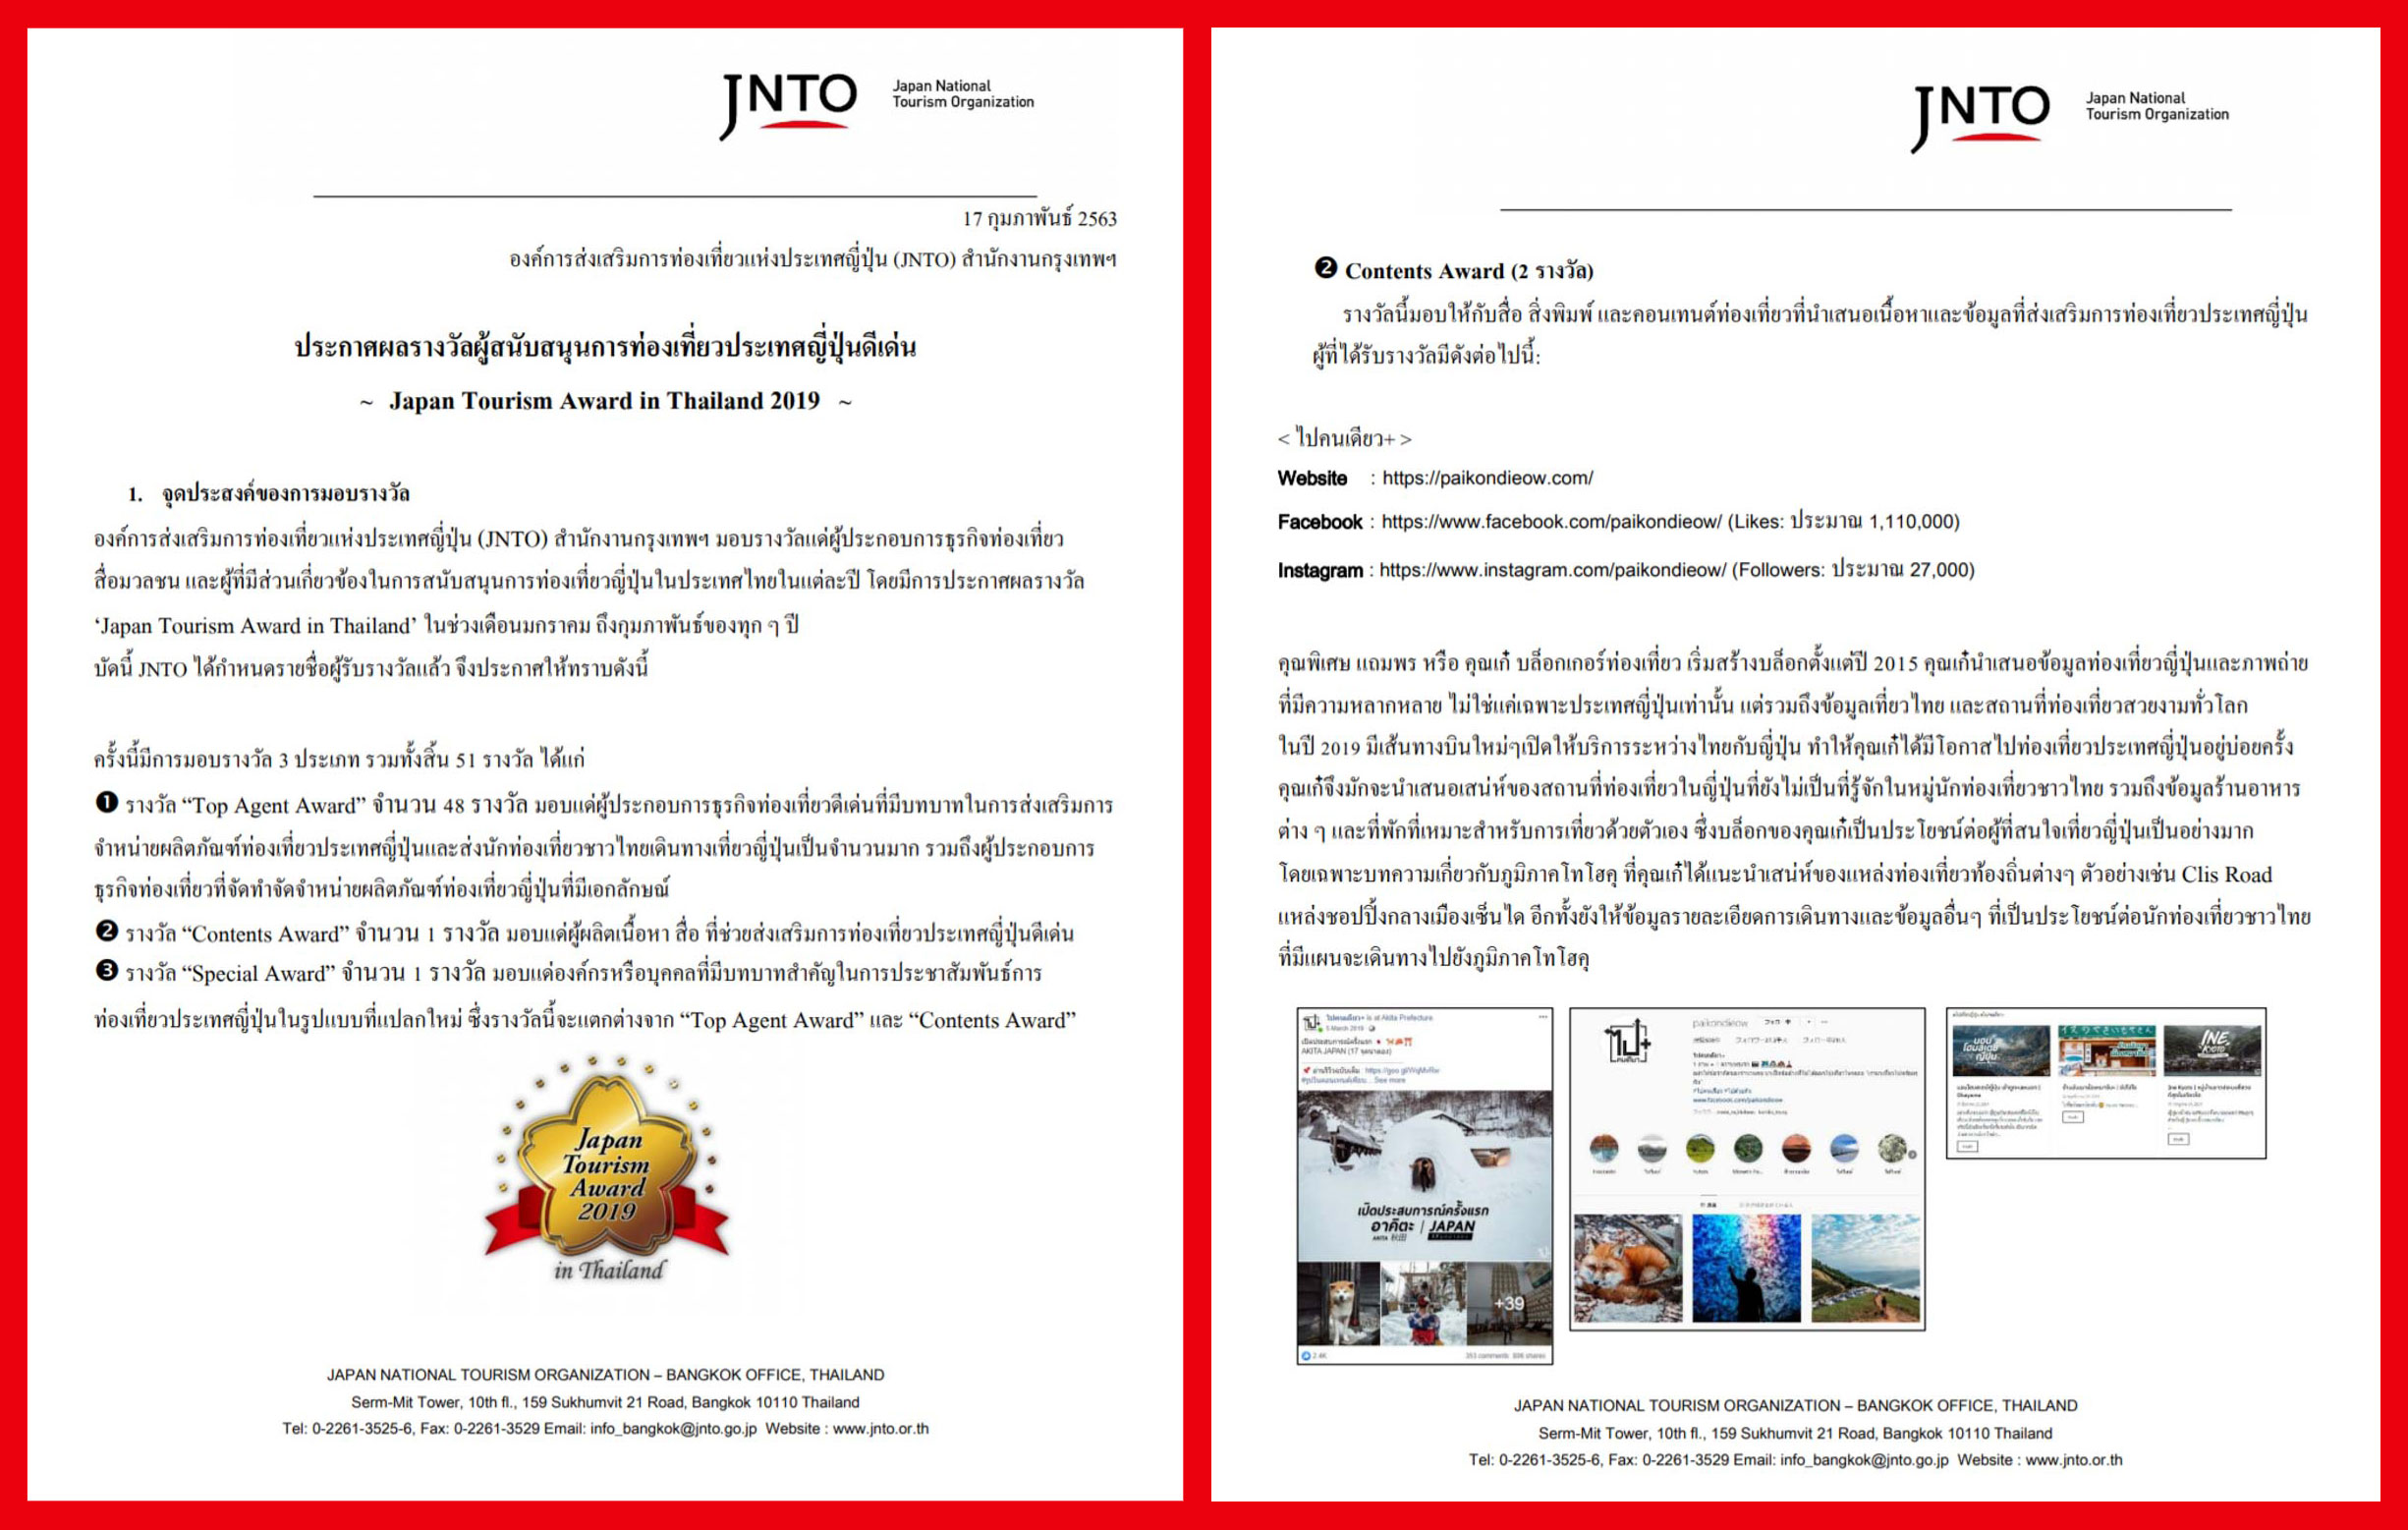 Japan Tourism Award in Thailand 2019, Contents Award 2019, Contents Award, JNTO, JNTO Thailand, องค์การส่งเสริมการท่องเที่ยวแห่งญี่ปุ่นประจำประเทศไทย, ญี่ปุ่น, เที่ยวญี่ปุ่น, รีวิวญี่ปุ่น, ประกาศผลรางวัล